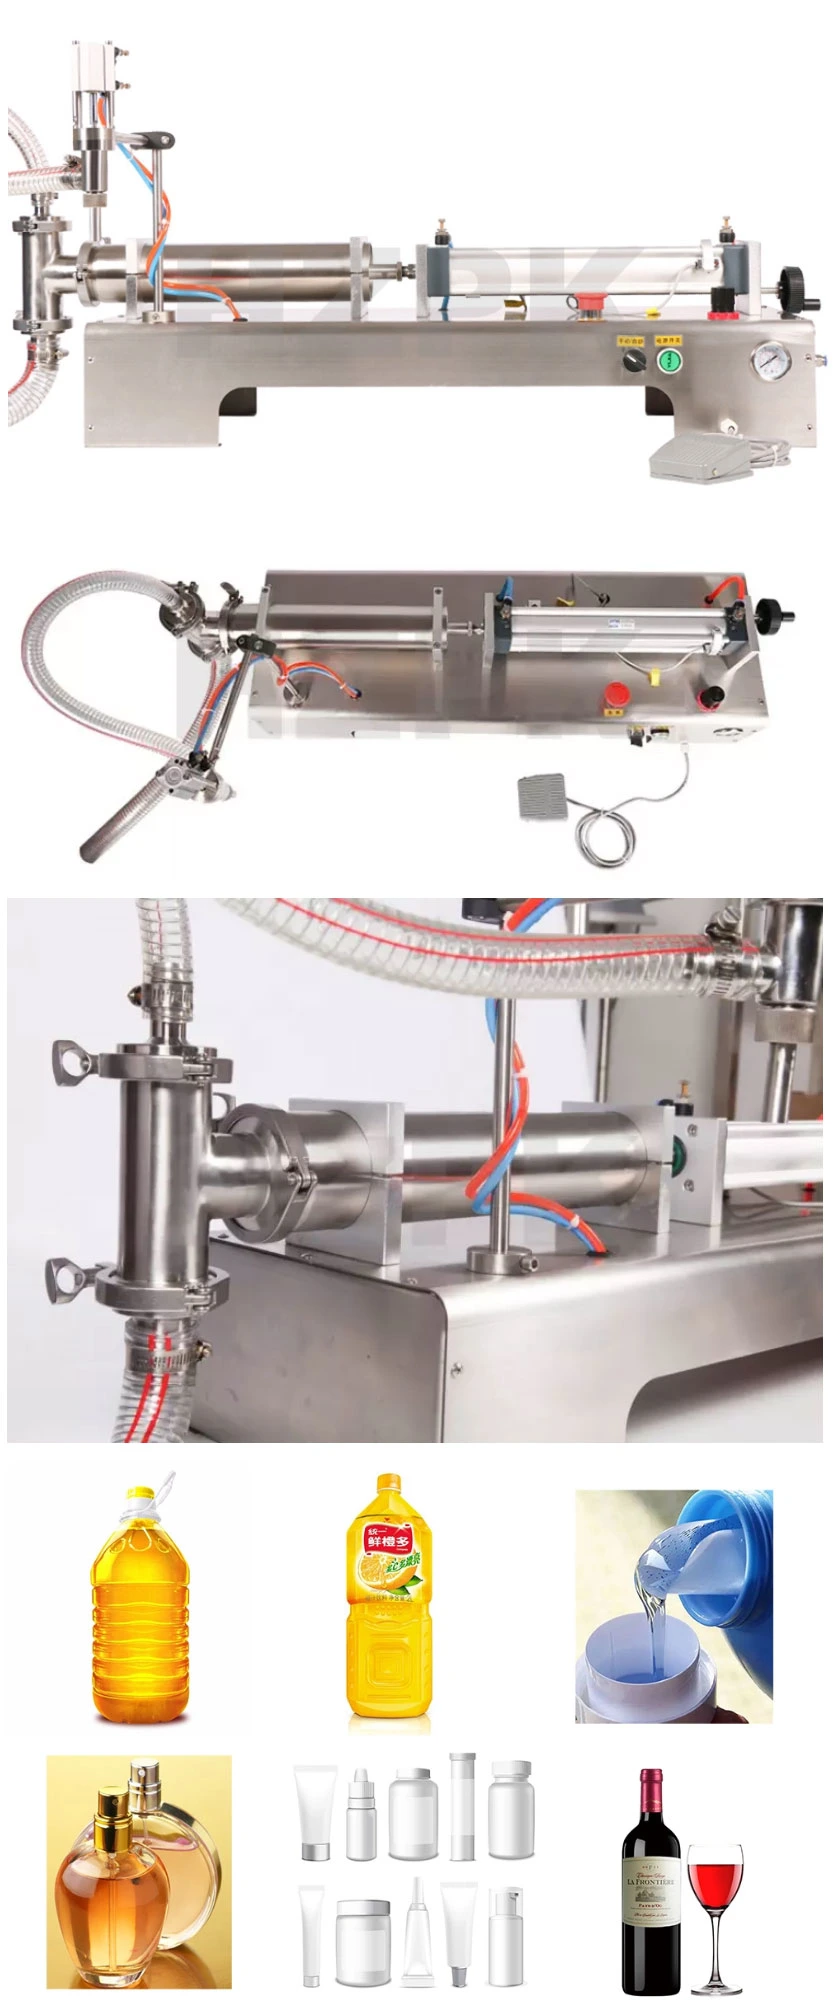 Hzpk Semi Automatic Liquid Filling Machine for Bottled Water Production